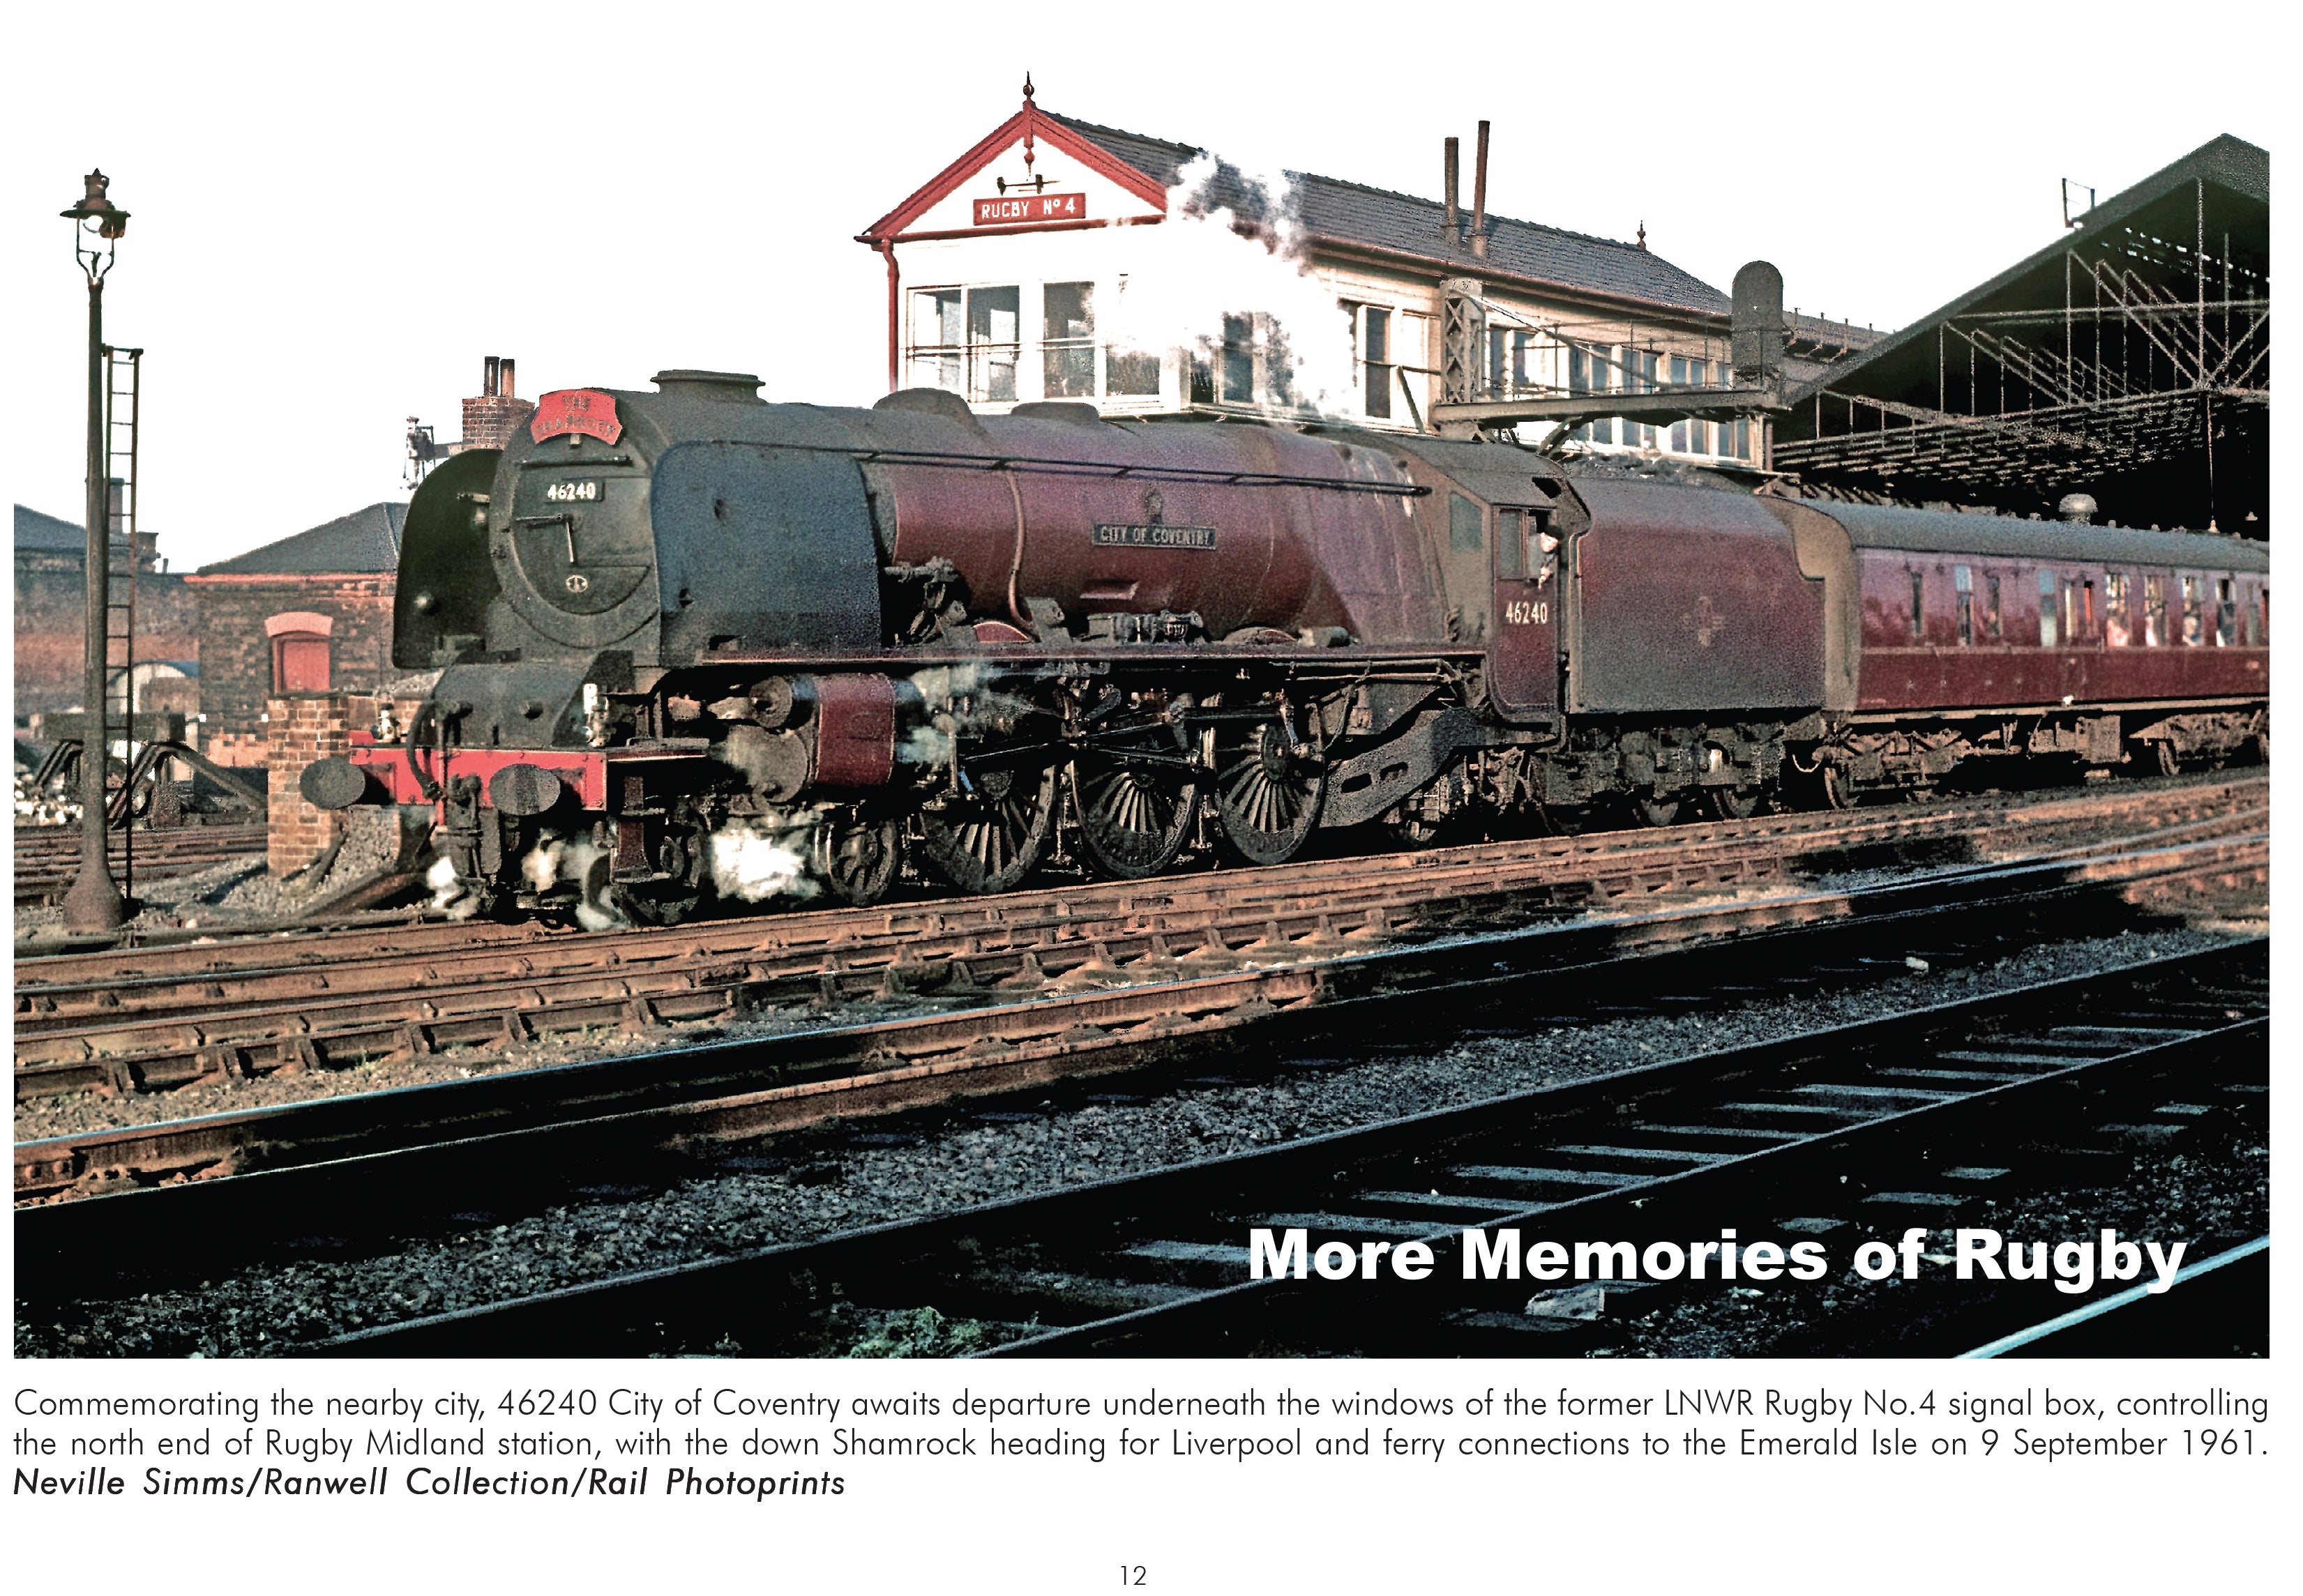 London Midland Steam Days Remembered IV